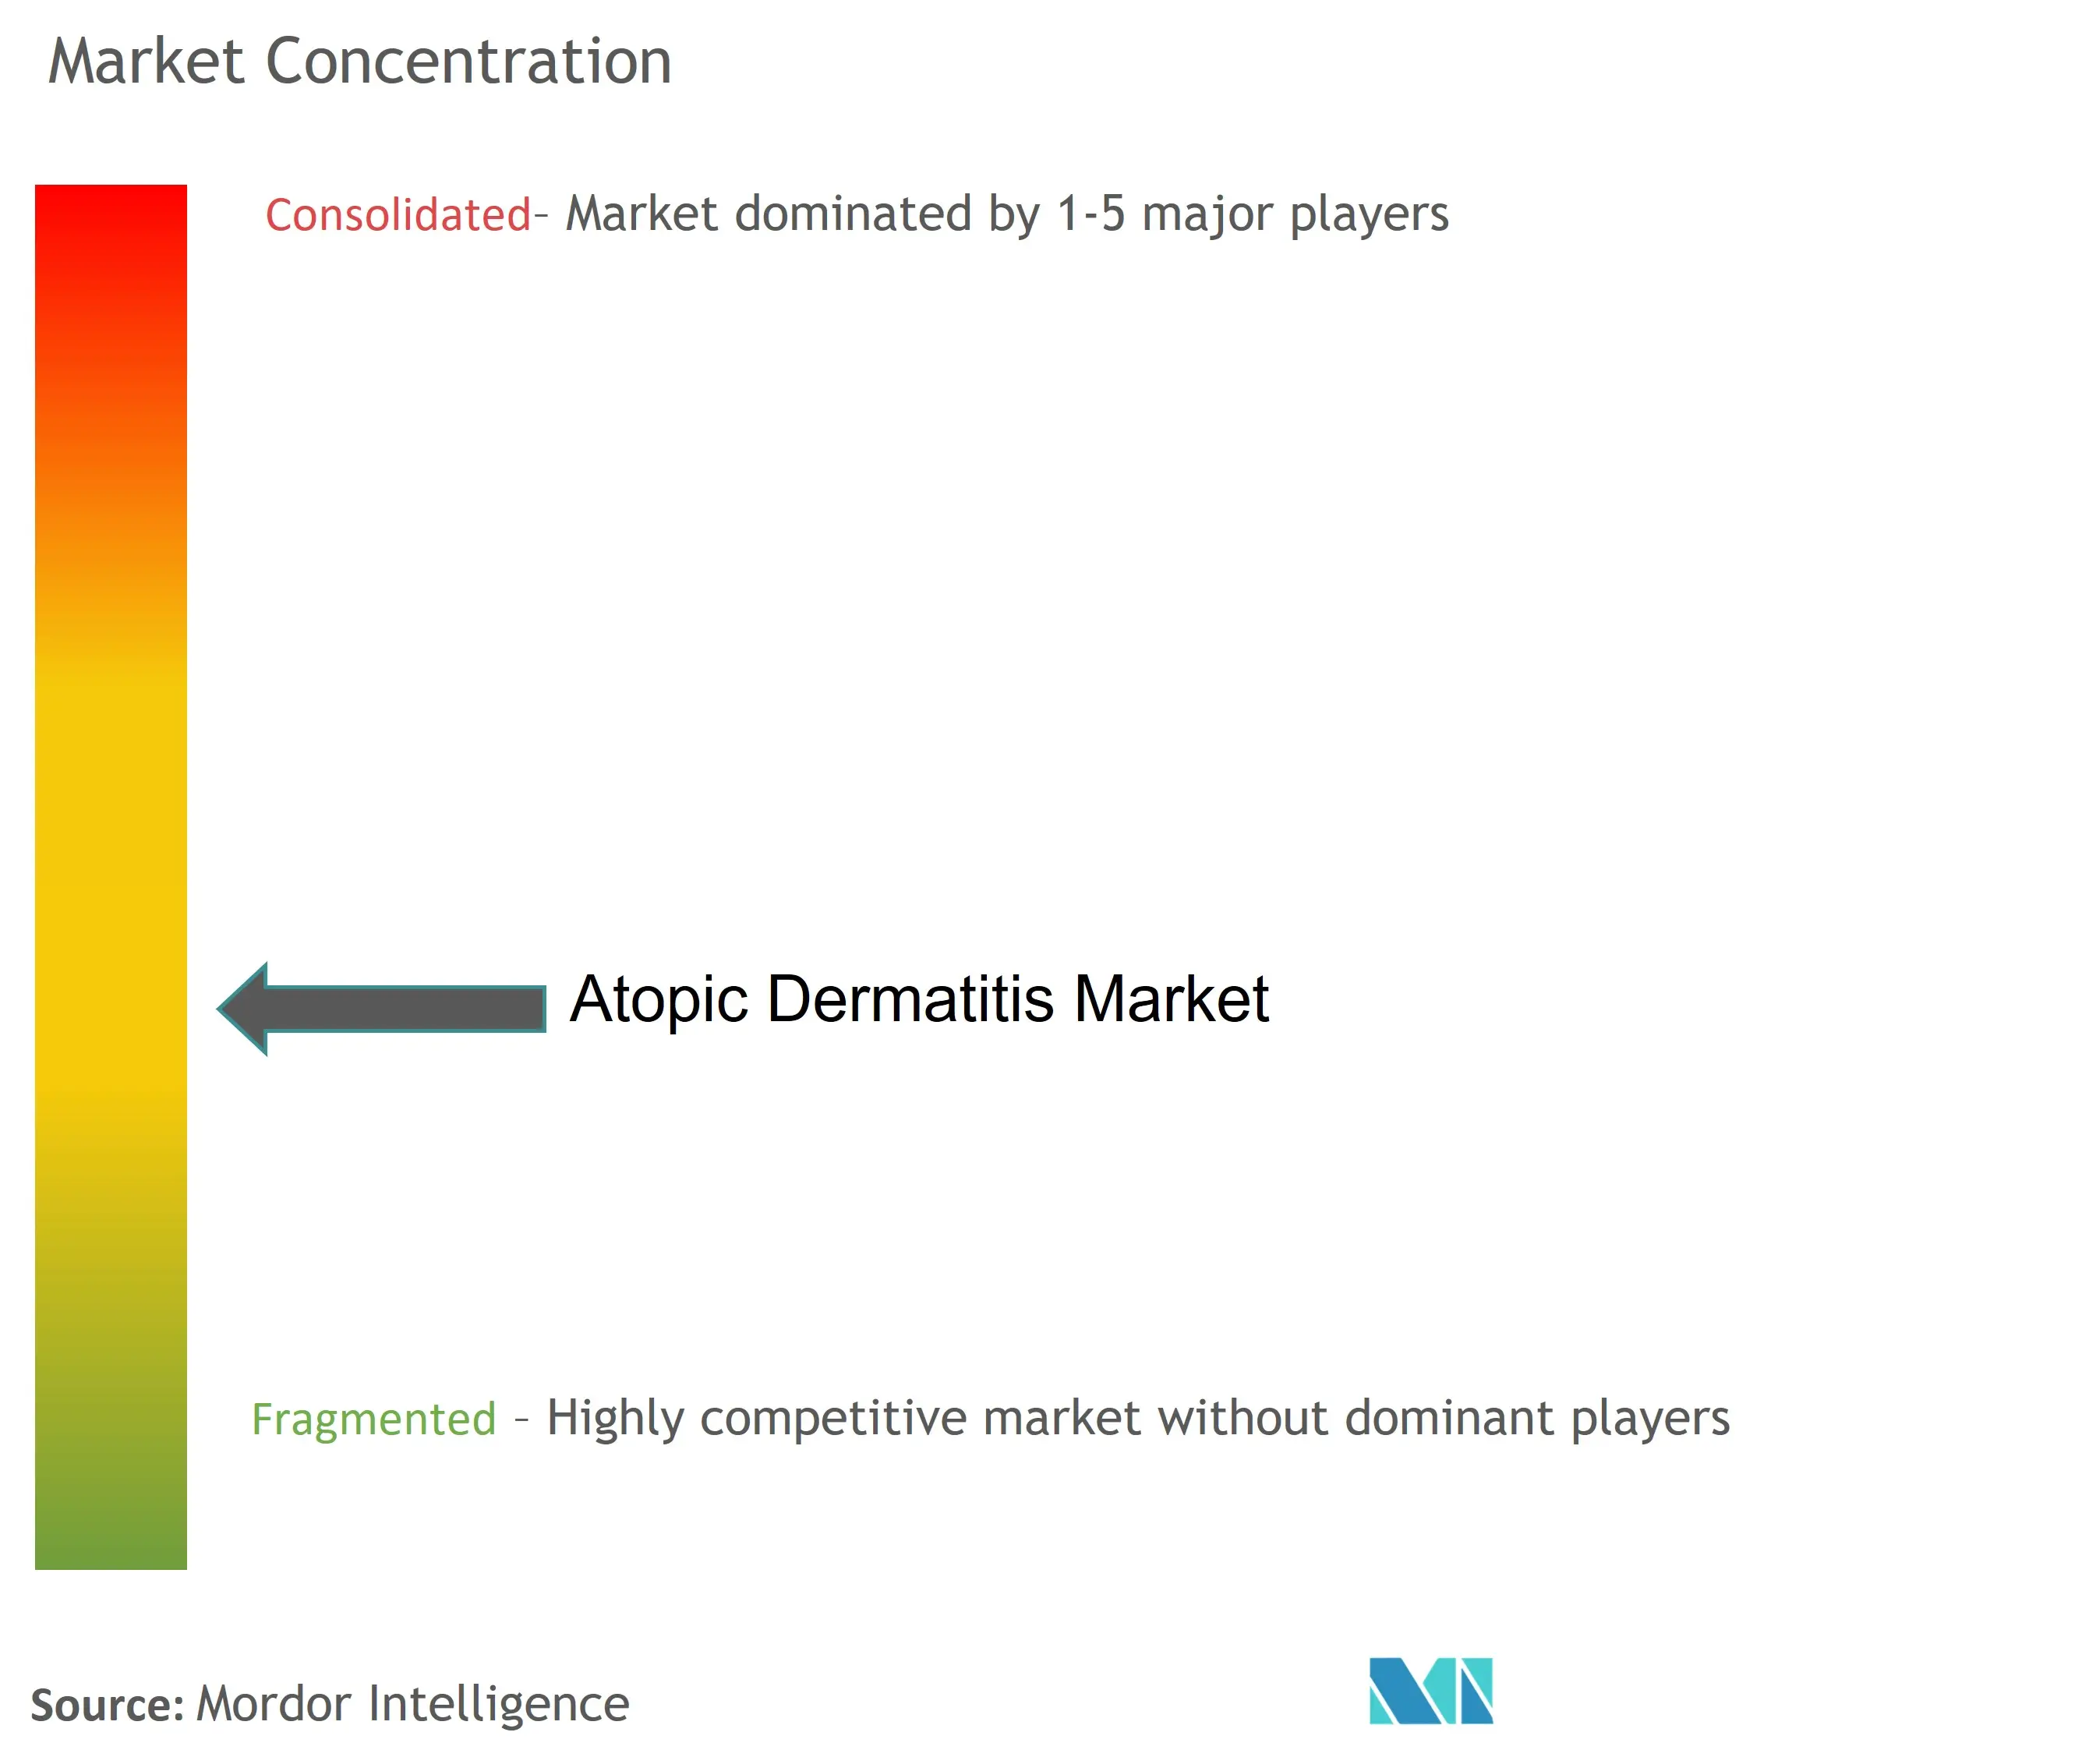 Atopic Dermatitis Market Concentration